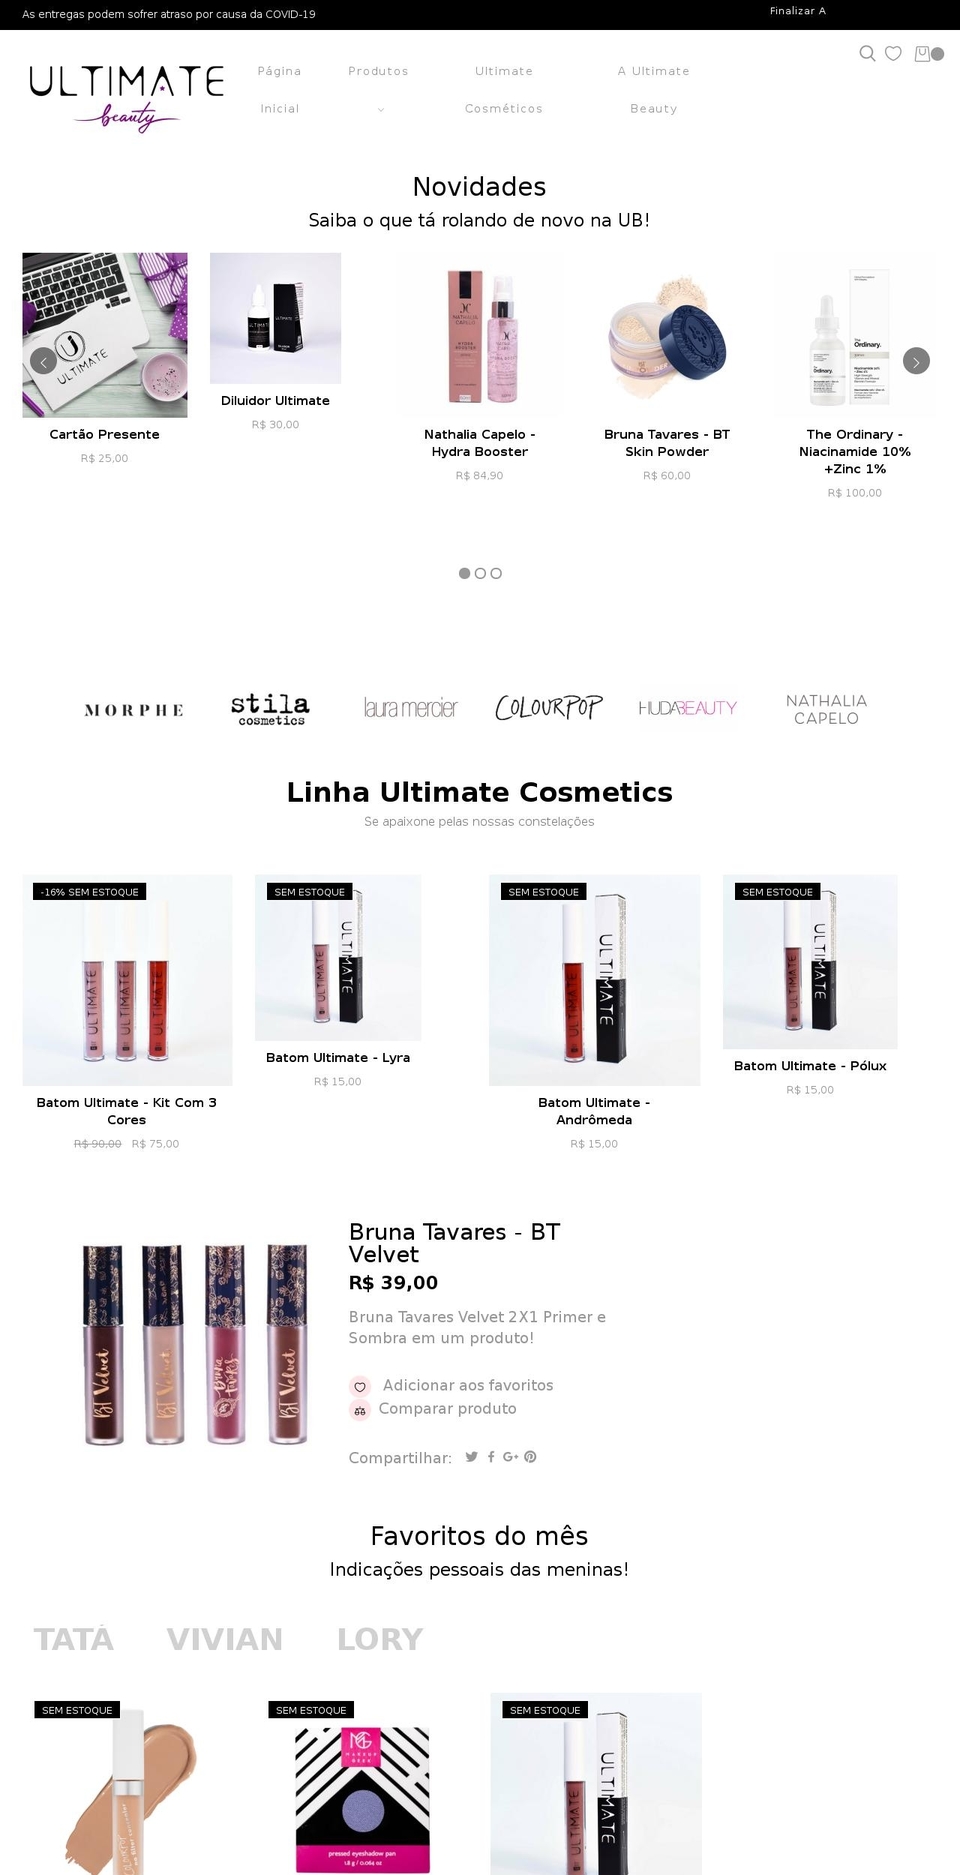 ultimatebeauty.com.br shopify website screenshot